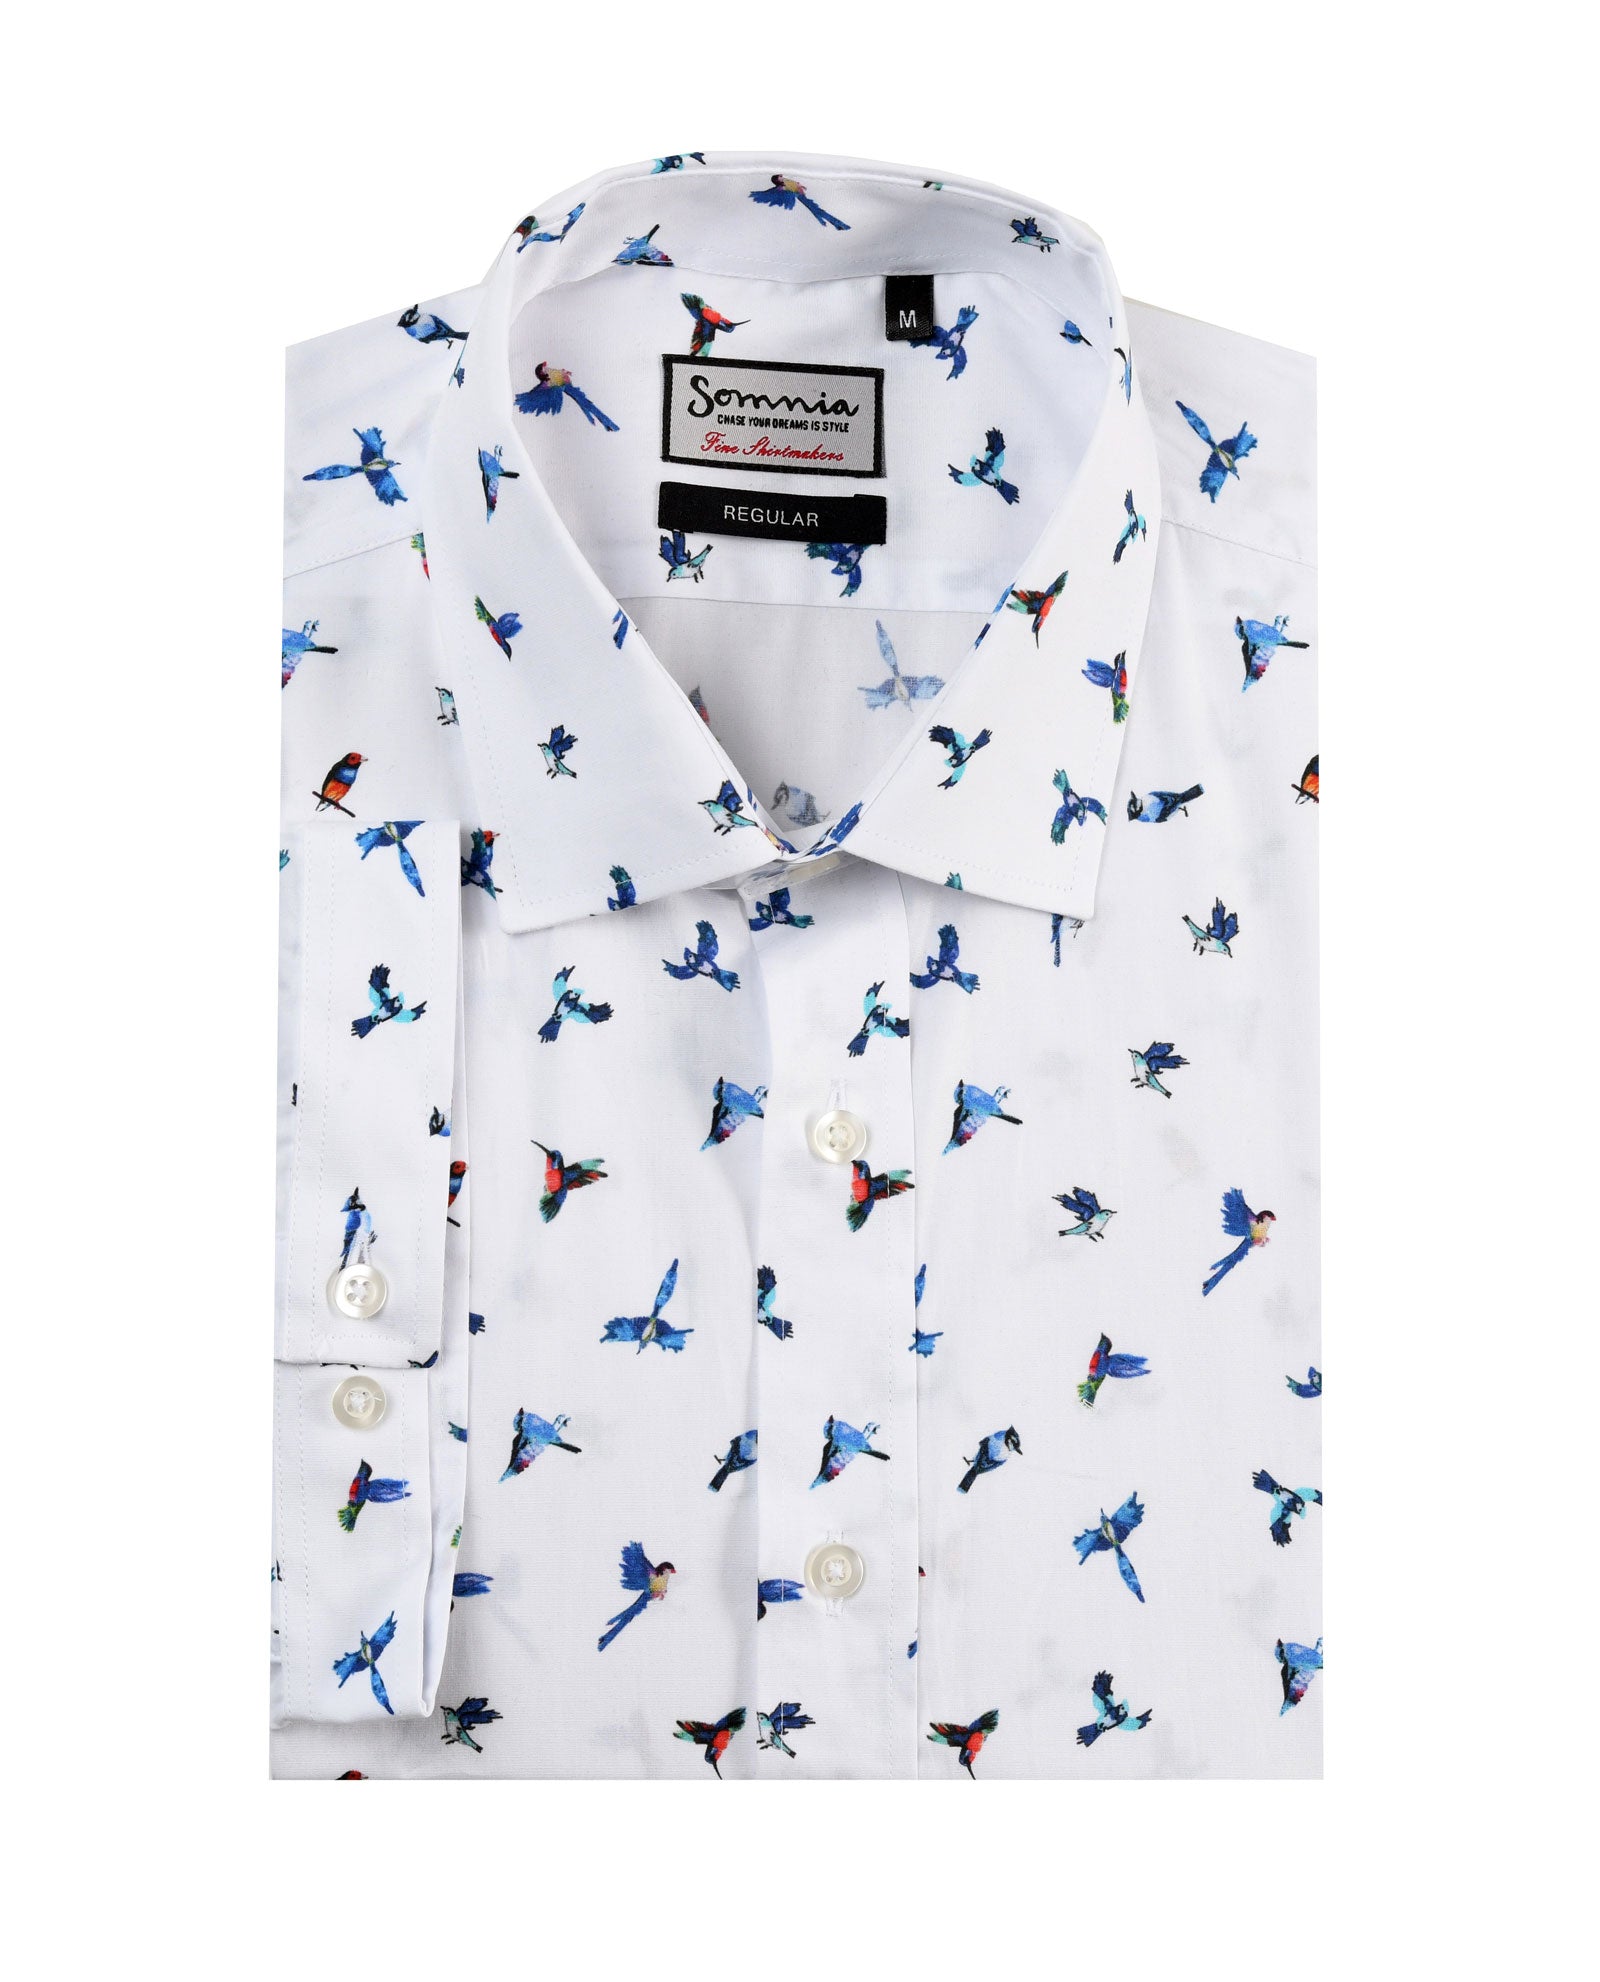 Hummingbird Pattern Short Sleeve Shirt